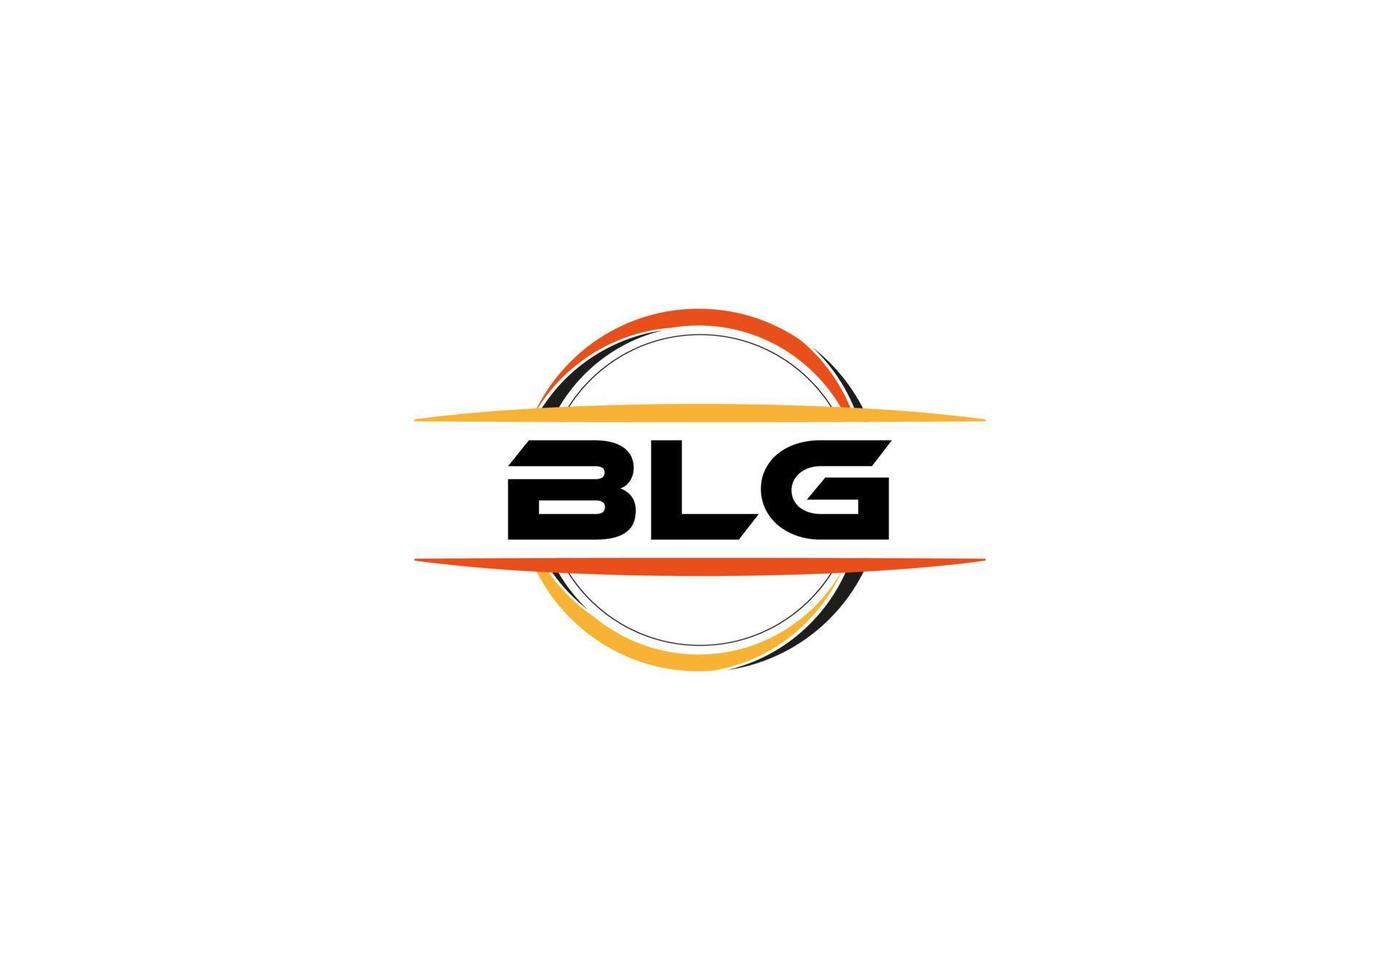 BLG letter royalty ellipse shape logo. BLG brush art logo. BLG logo for a company, business, and commercial use. vector